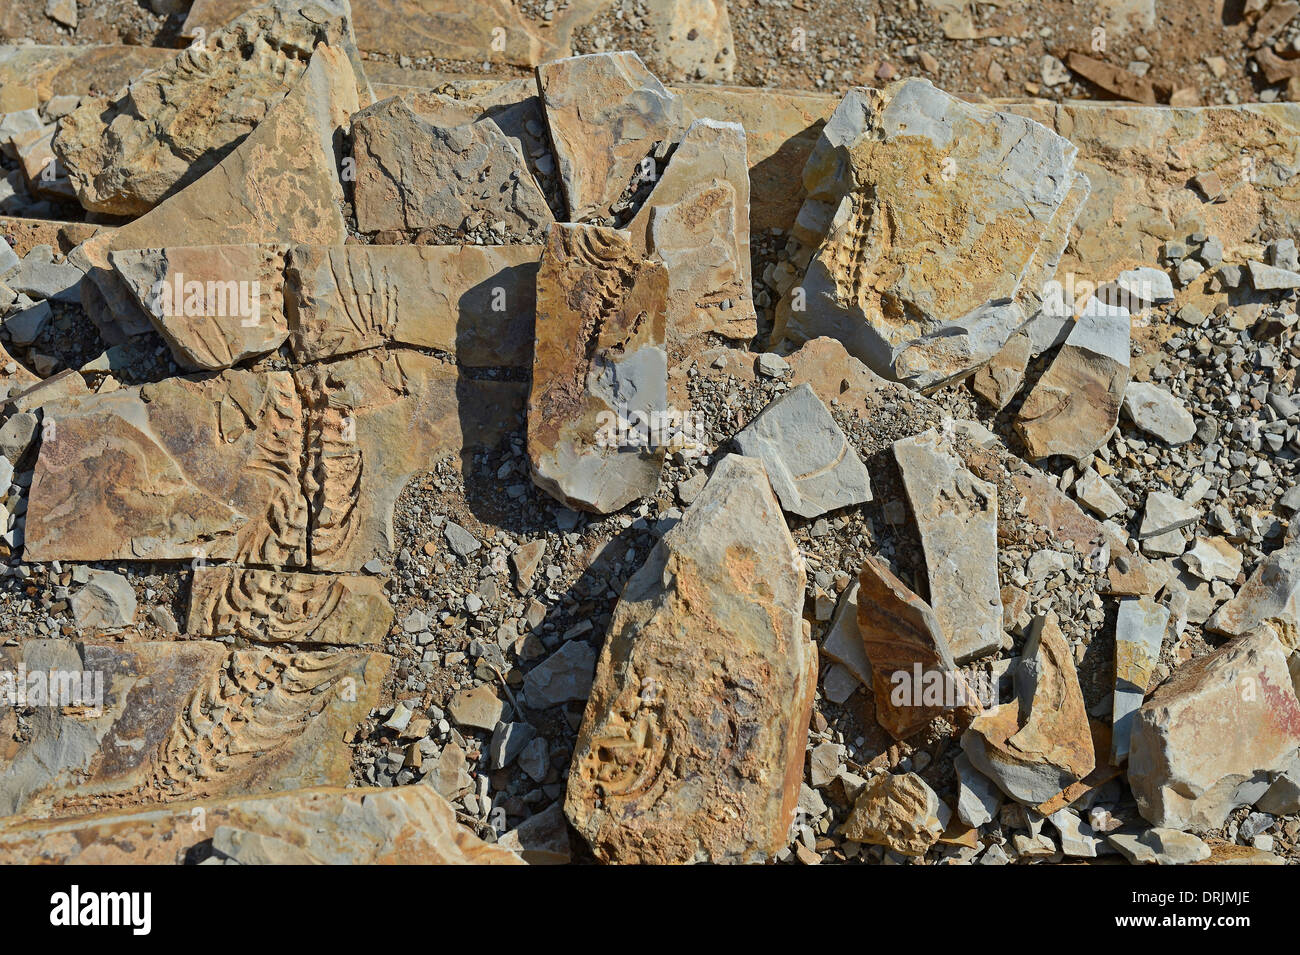 ca. 300 Millionen Jahre alte Fossilien von Mesosaurus Tenuidens mit Keetmanshoop, Namibia, Afrika, ca. 300 Millionen Jahre alt Stockfoto